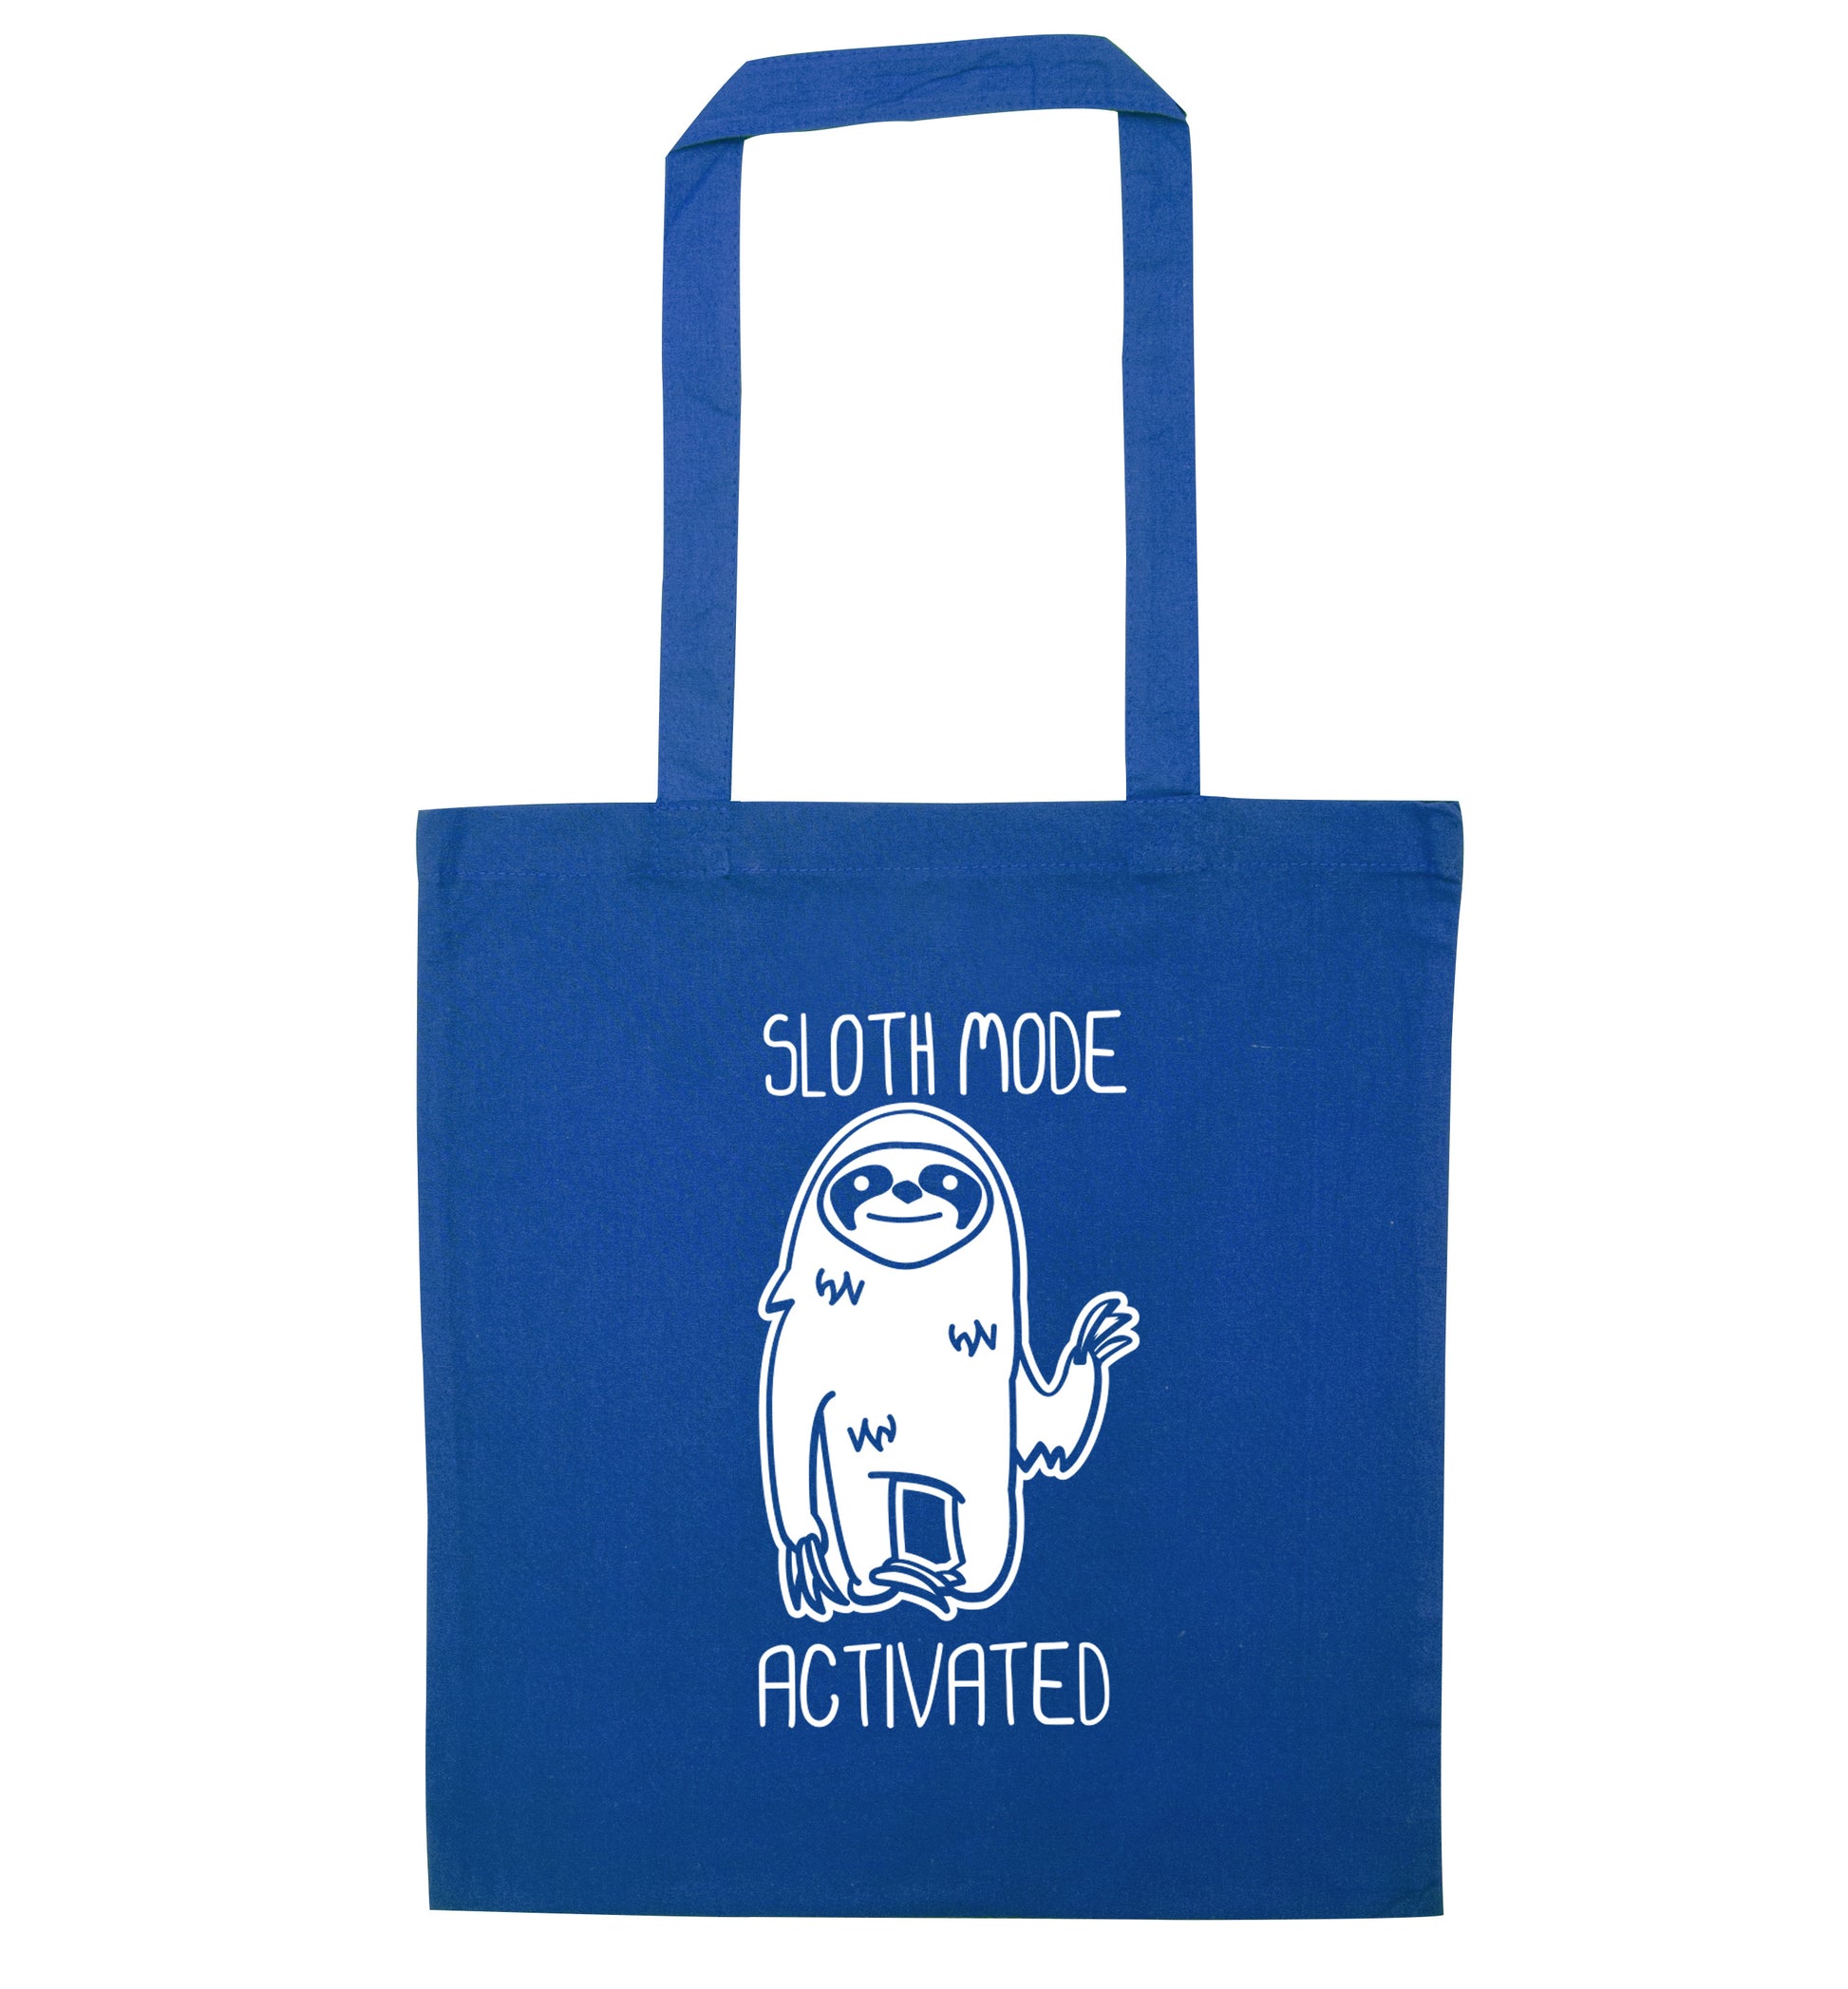 Sloth mode acitvated blue tote bag